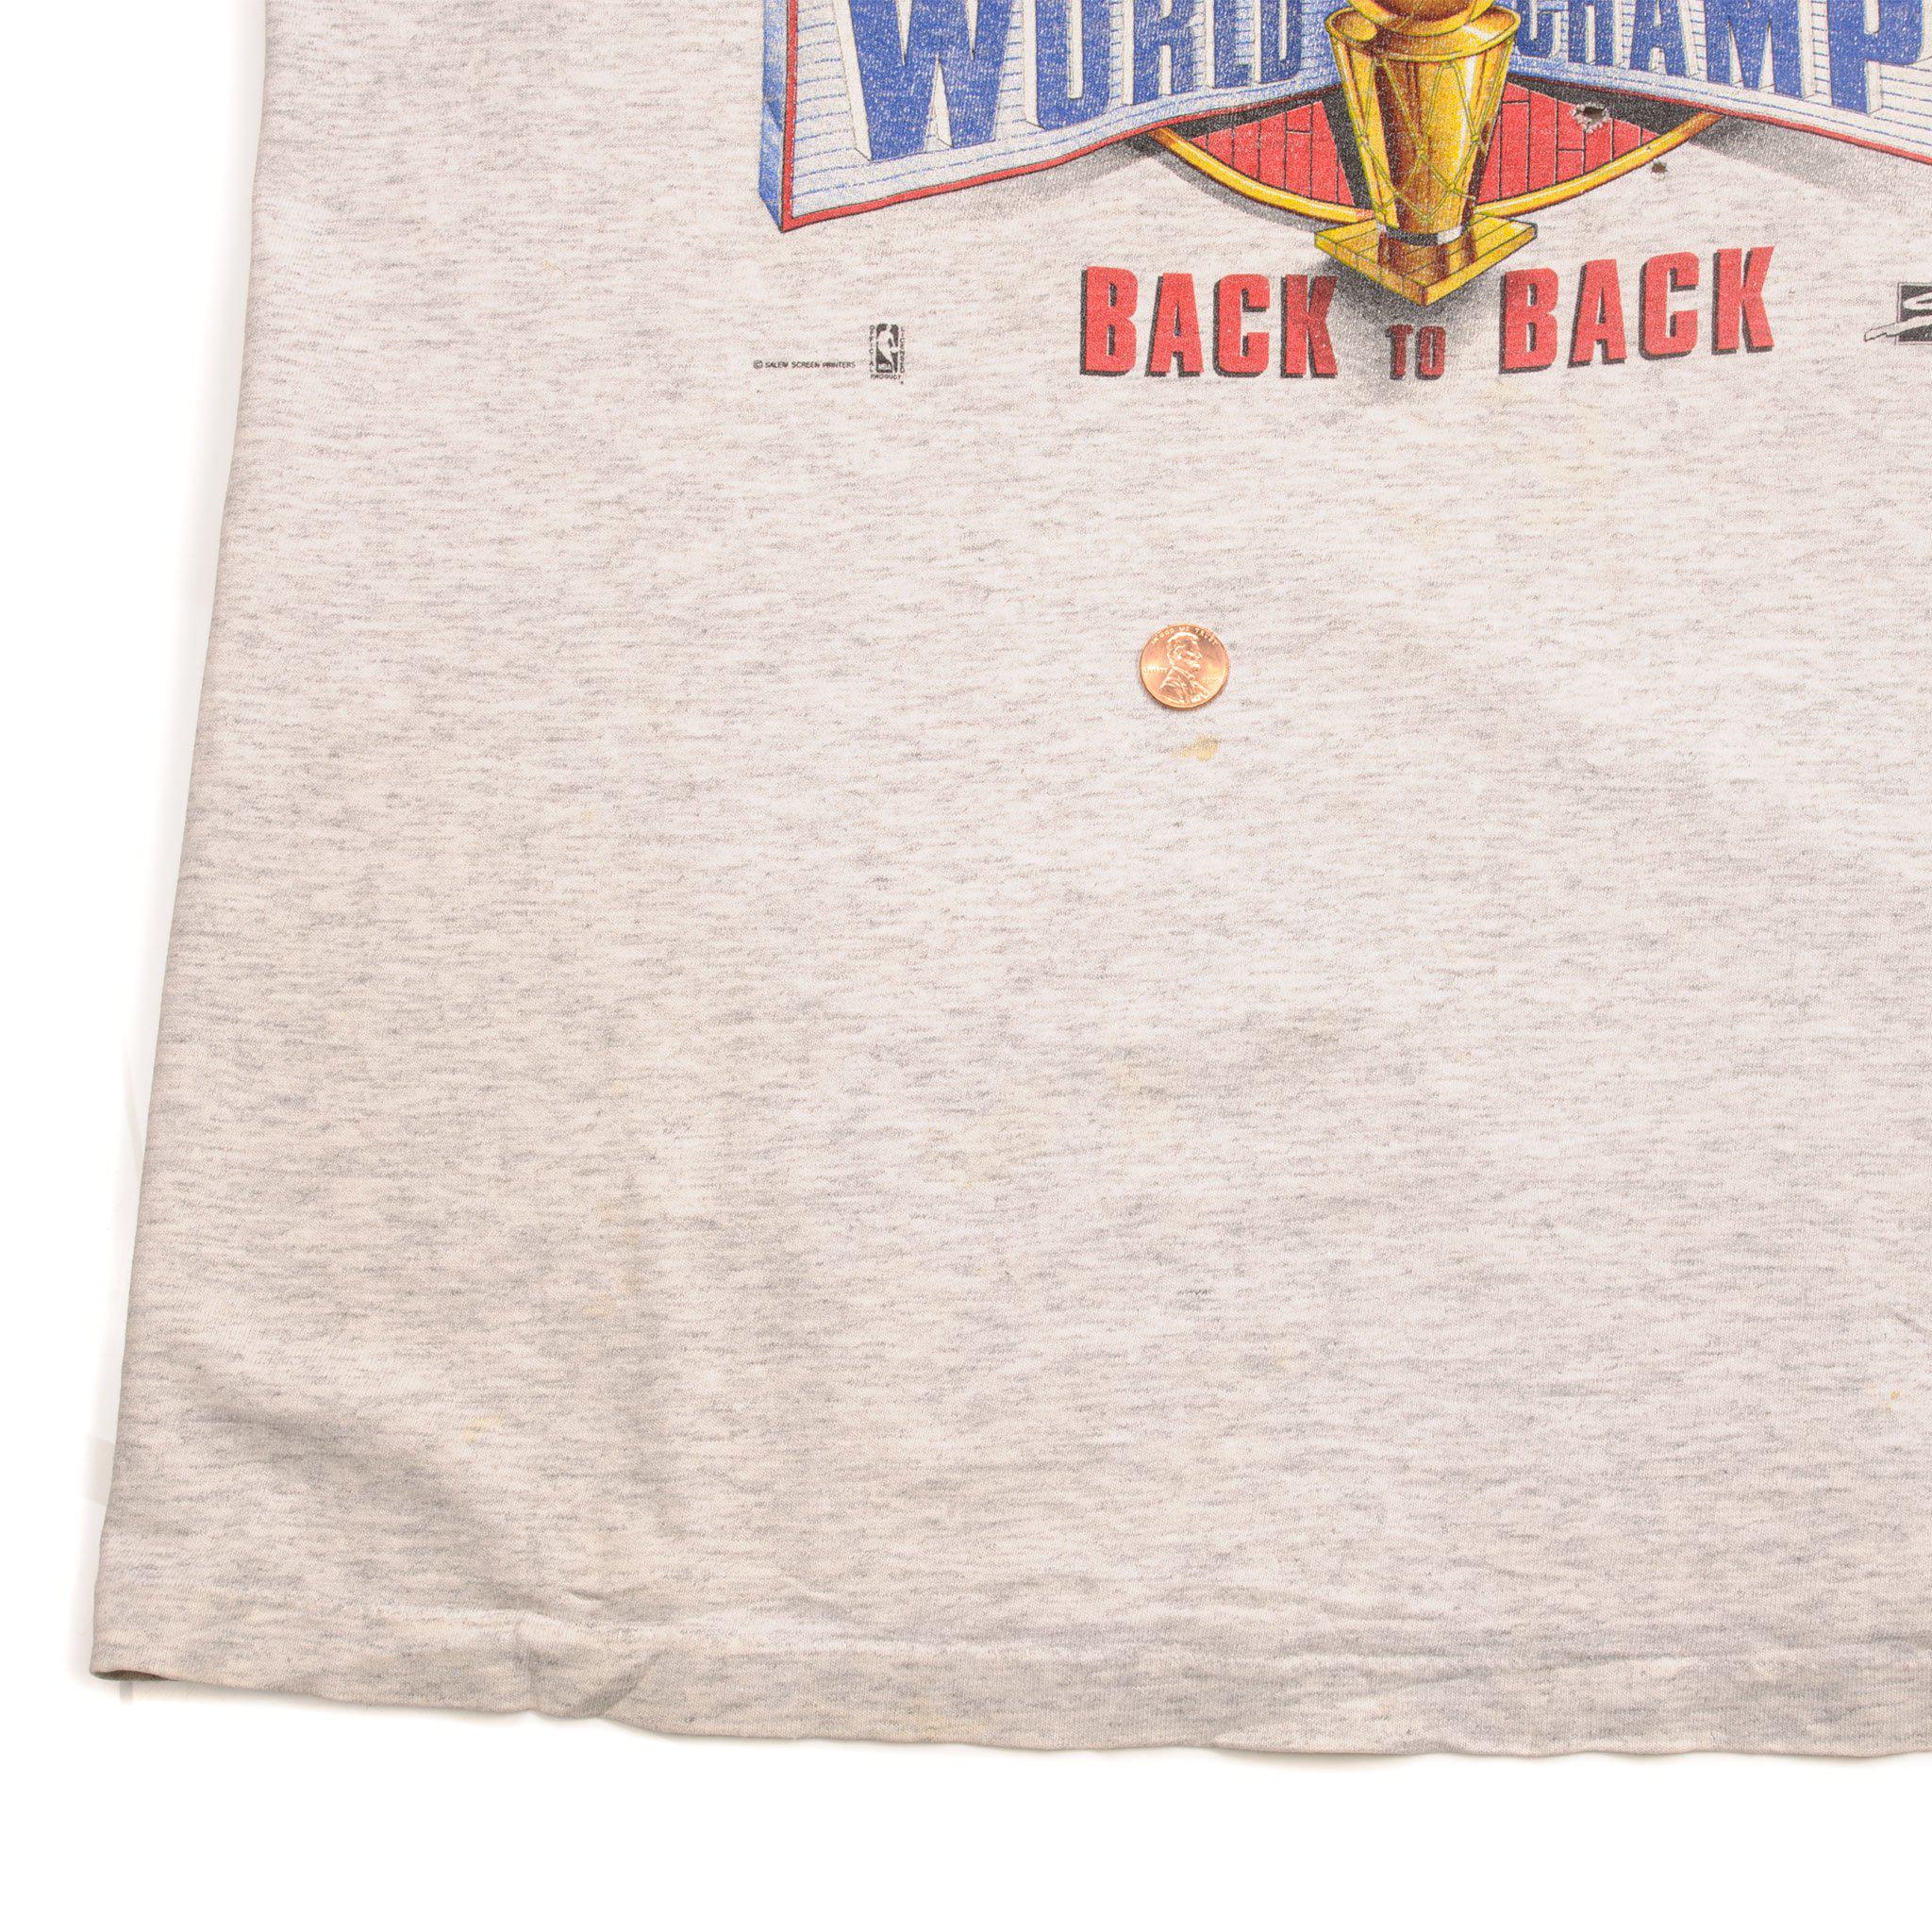 Vintage Detroit Pistons 1990 T-Shirt NBA Basketball Champs – For